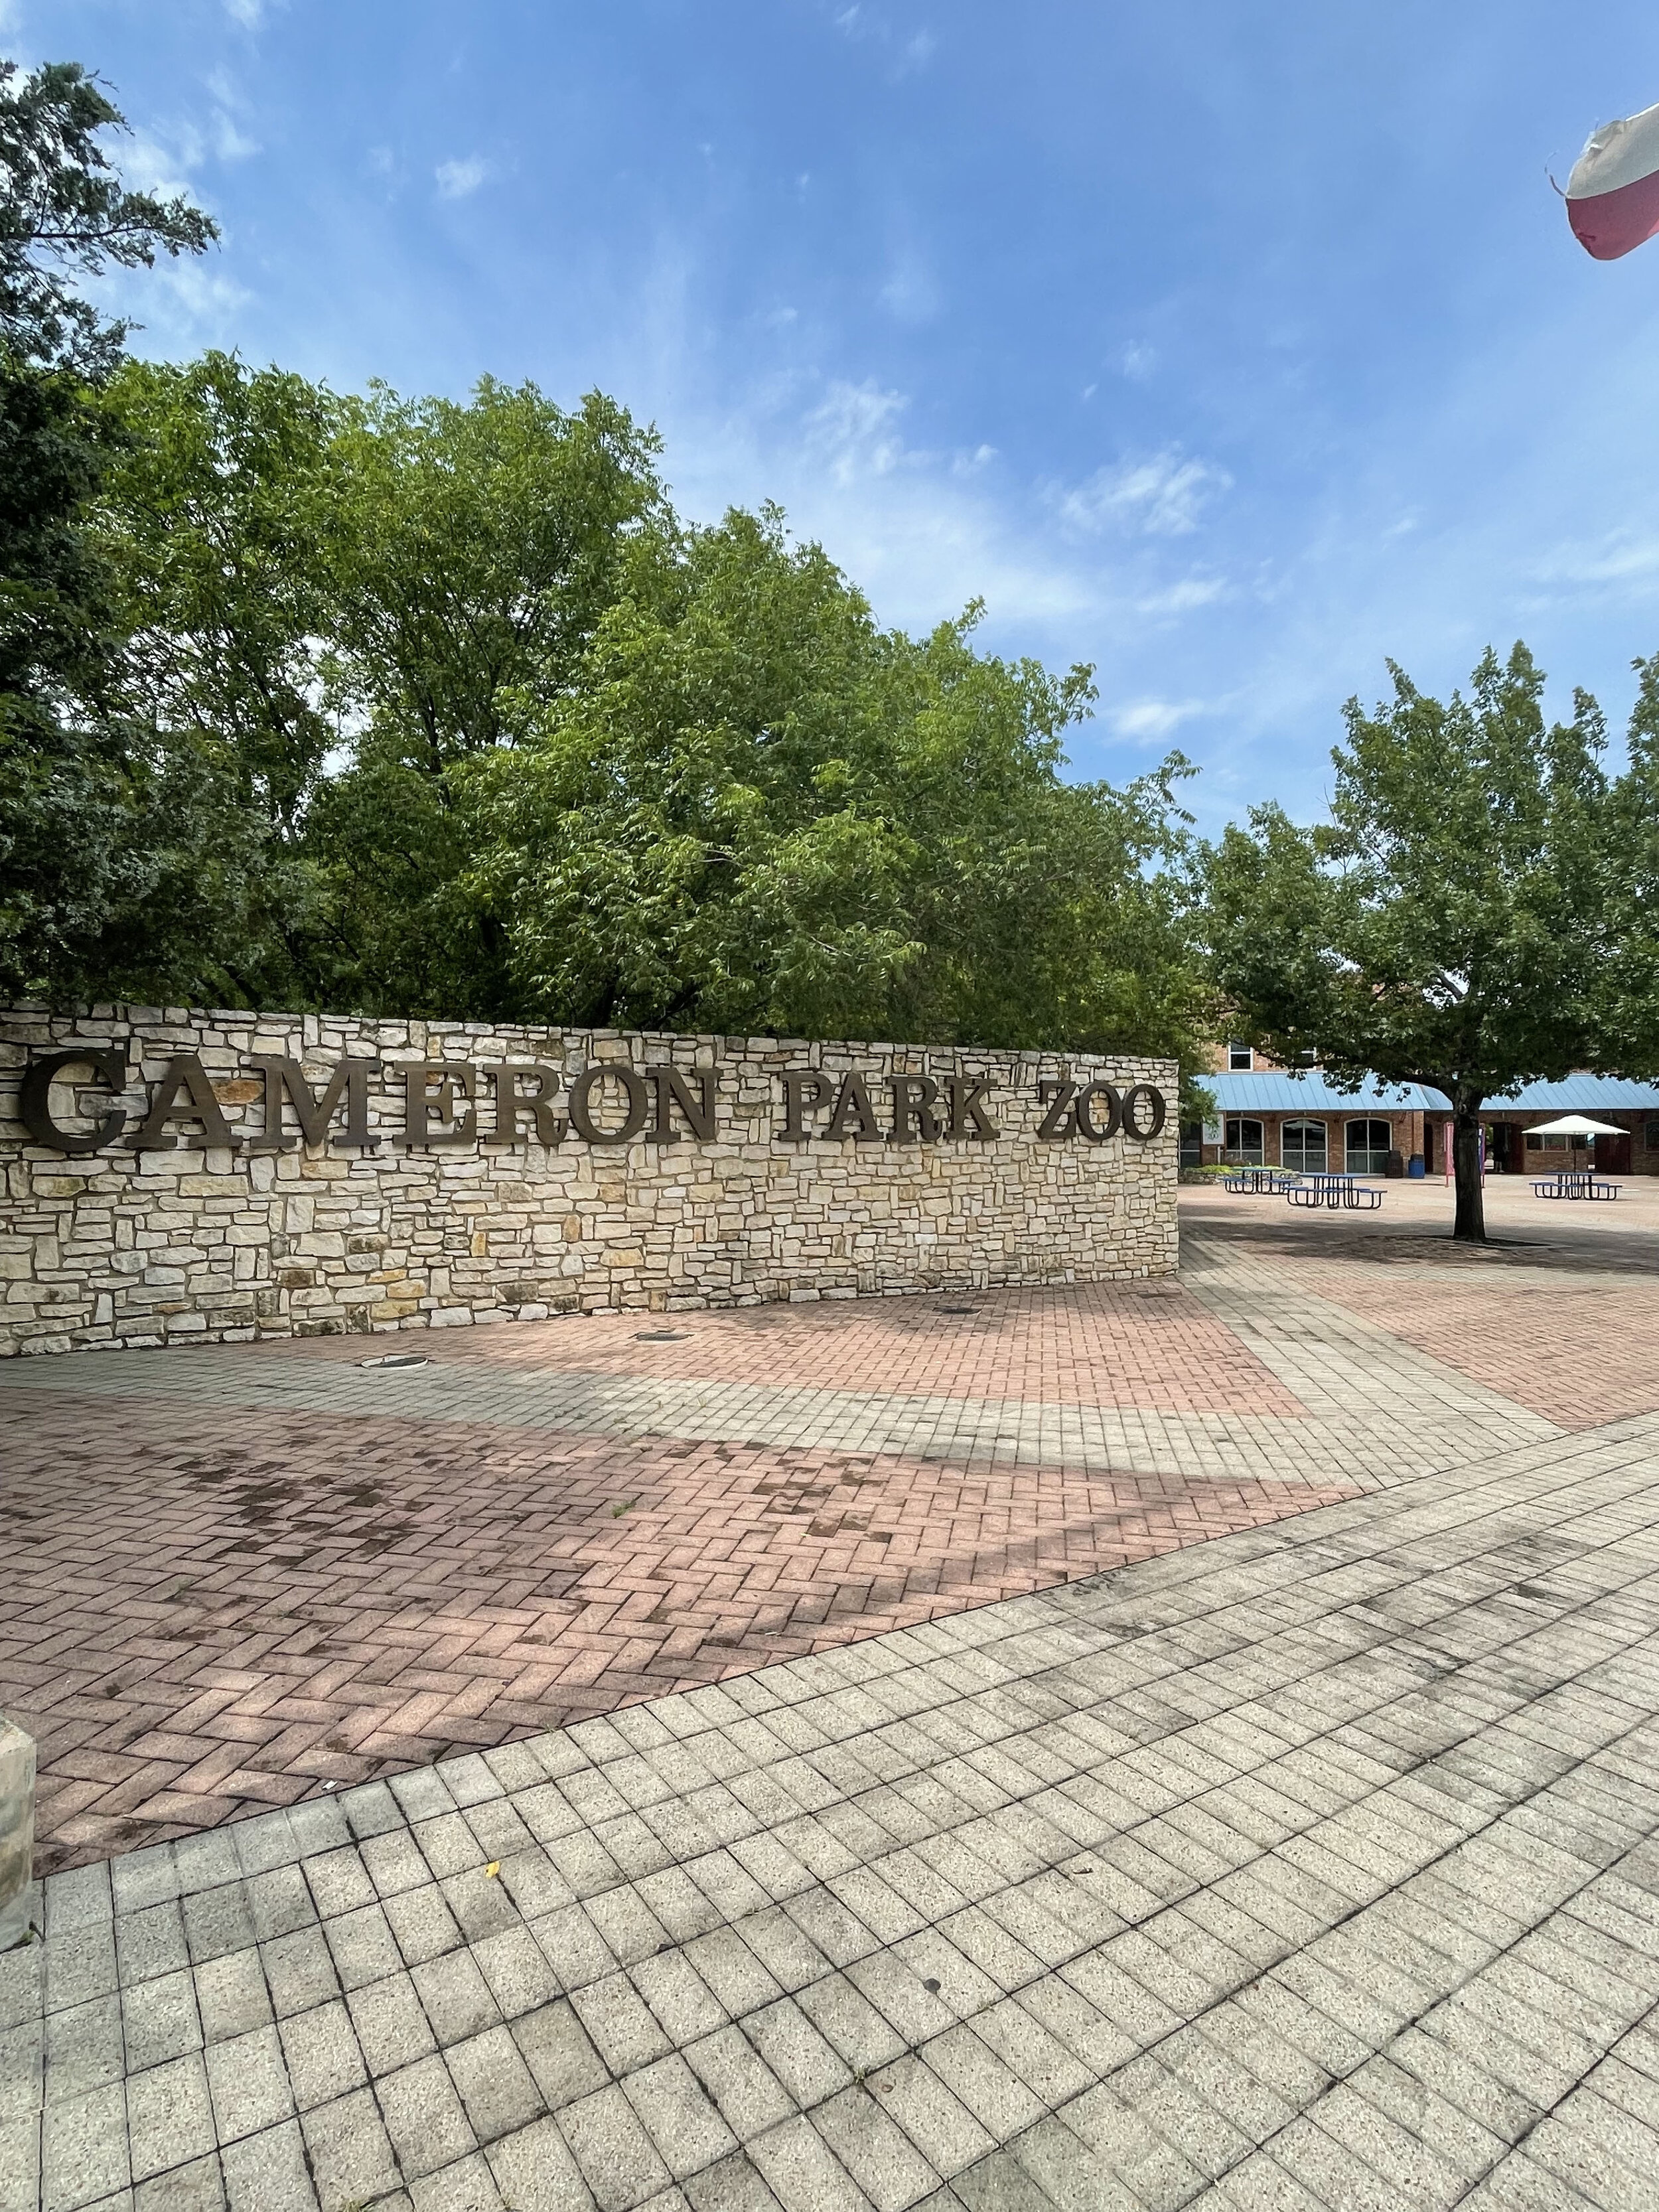 The Cameron Park Zoo